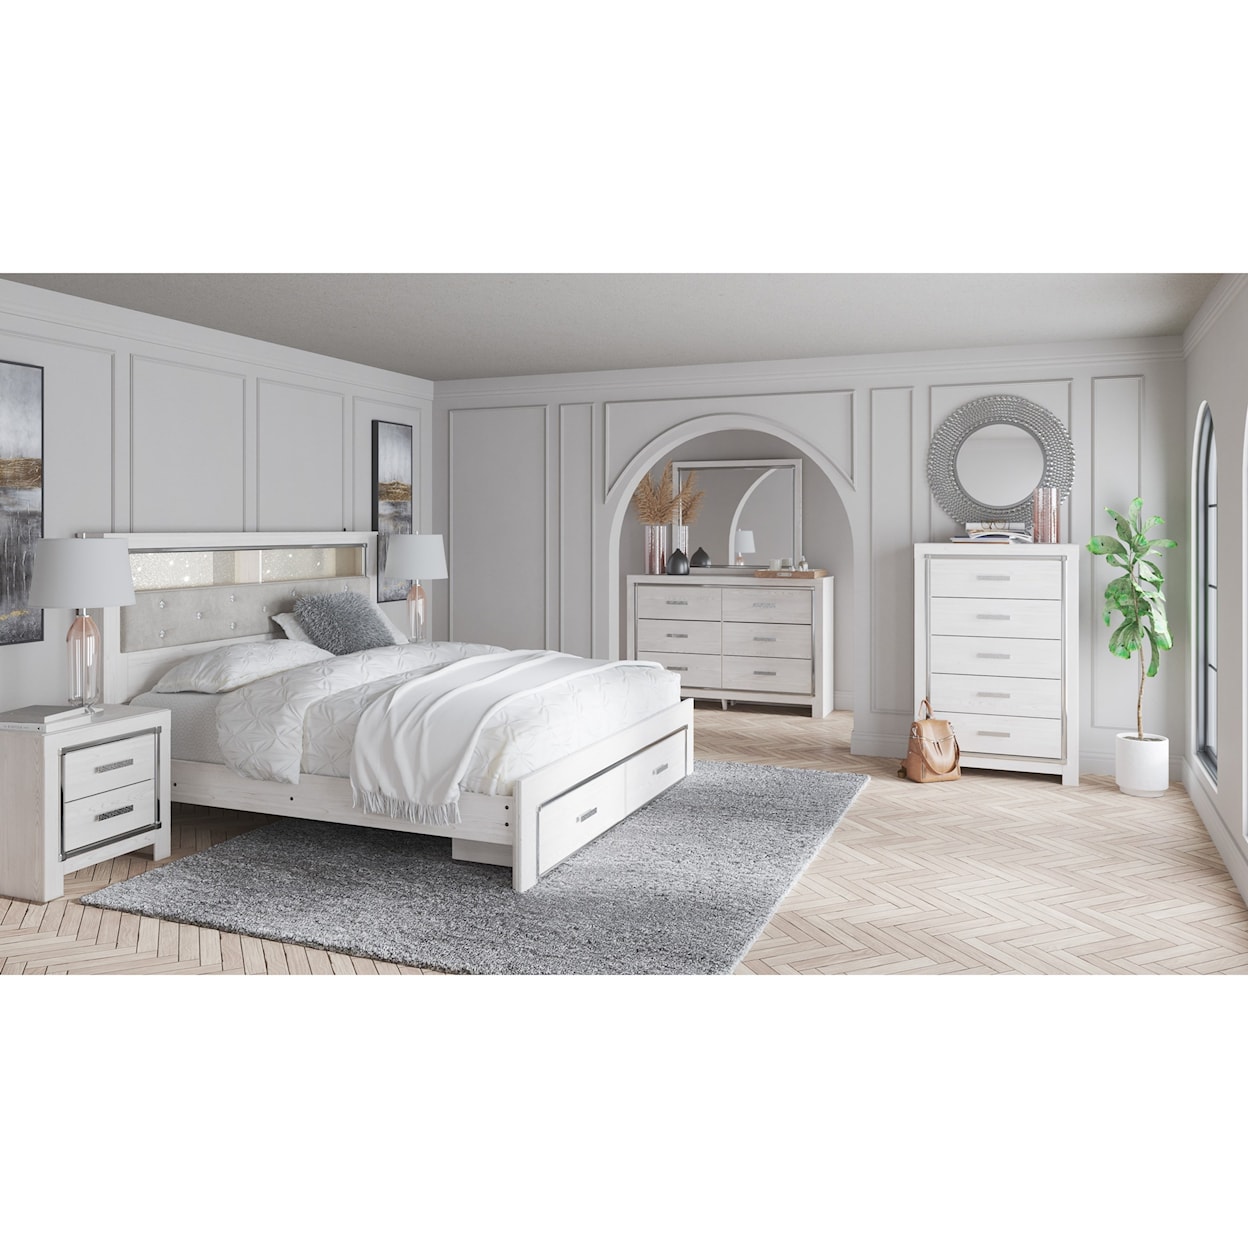 Ashley Furniture Signature Design Altyra King Bedroom Group